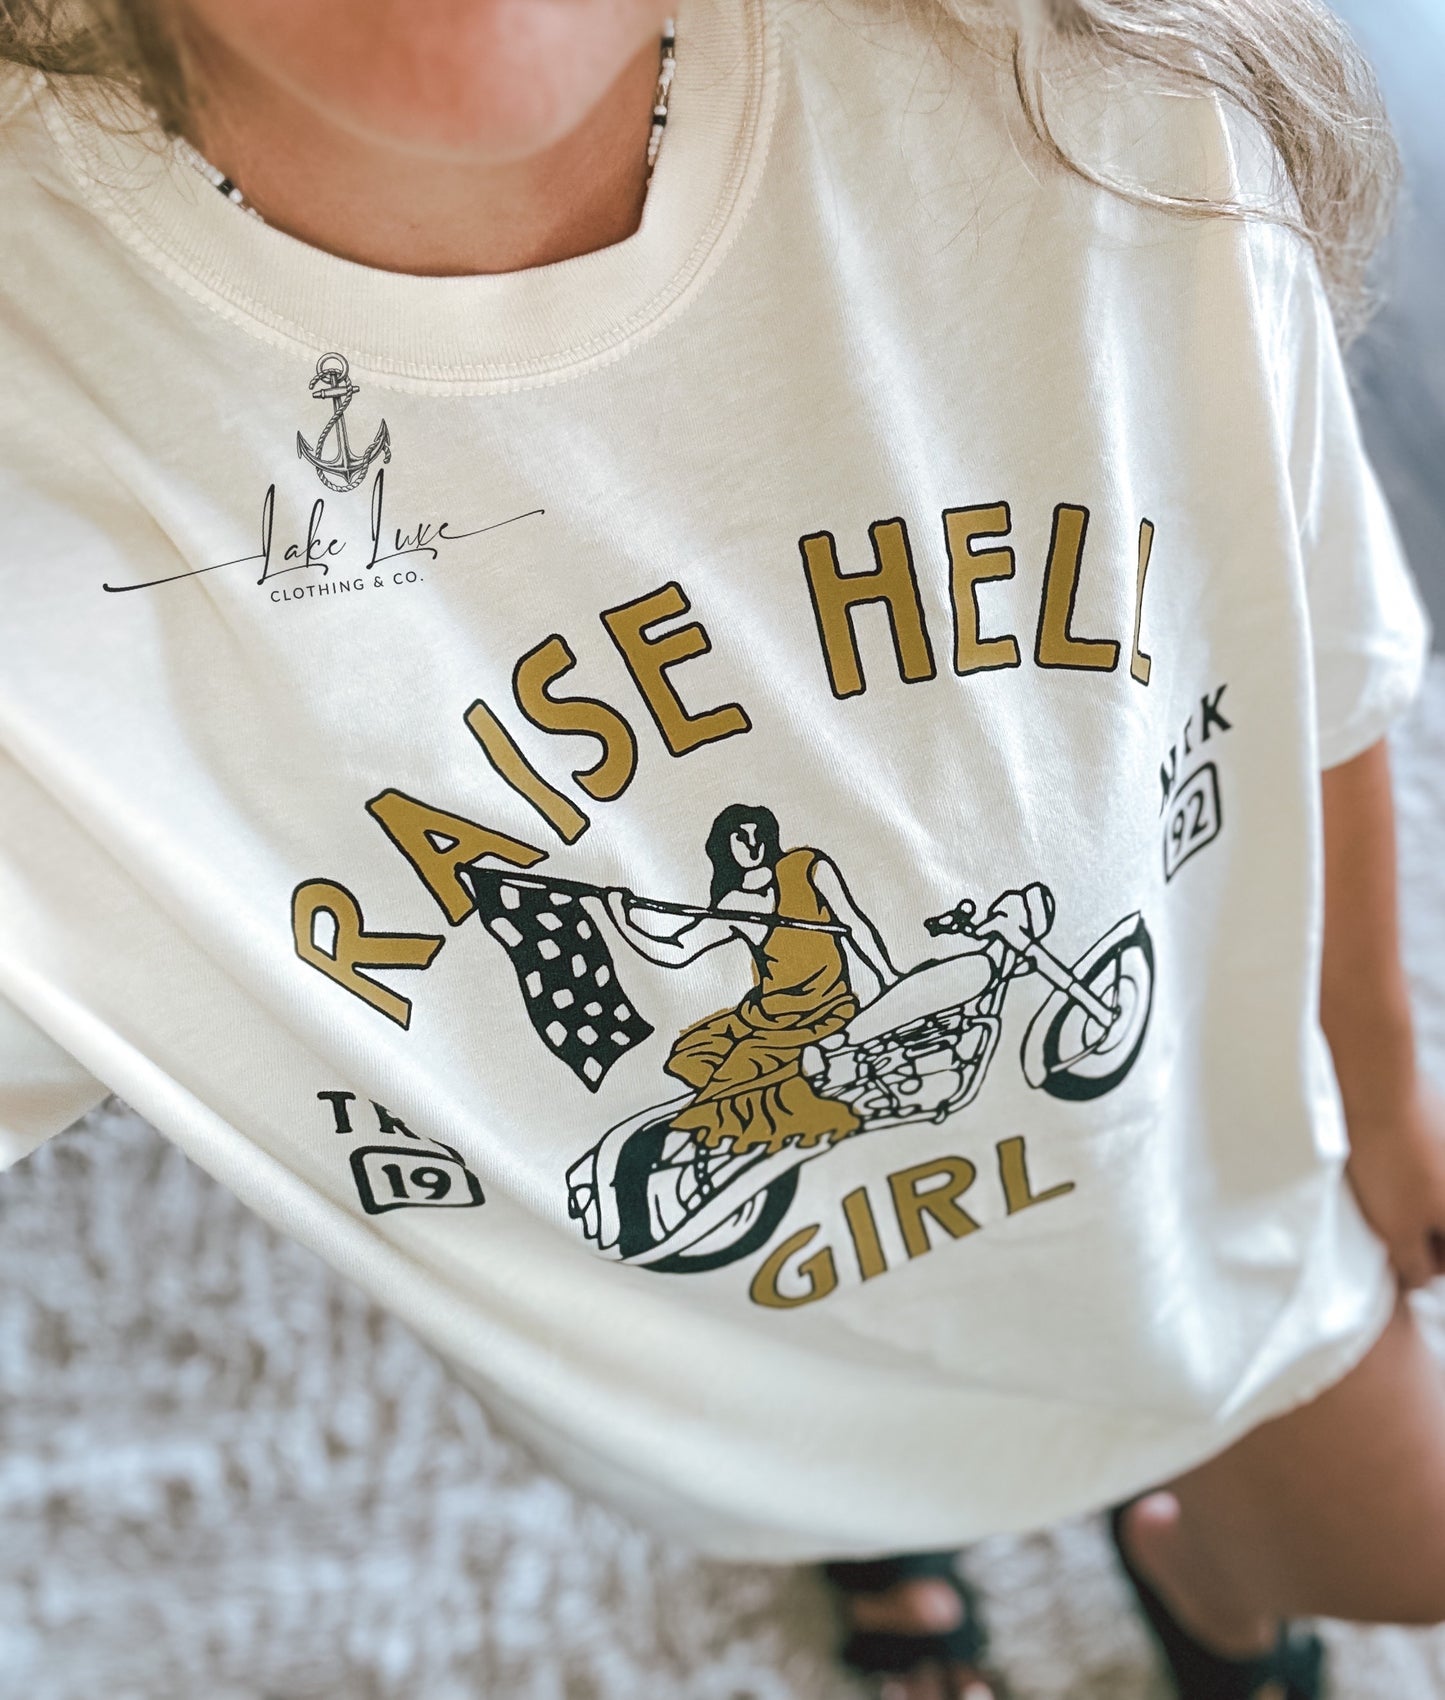 Raise Hell Girl - oversized graphic tee